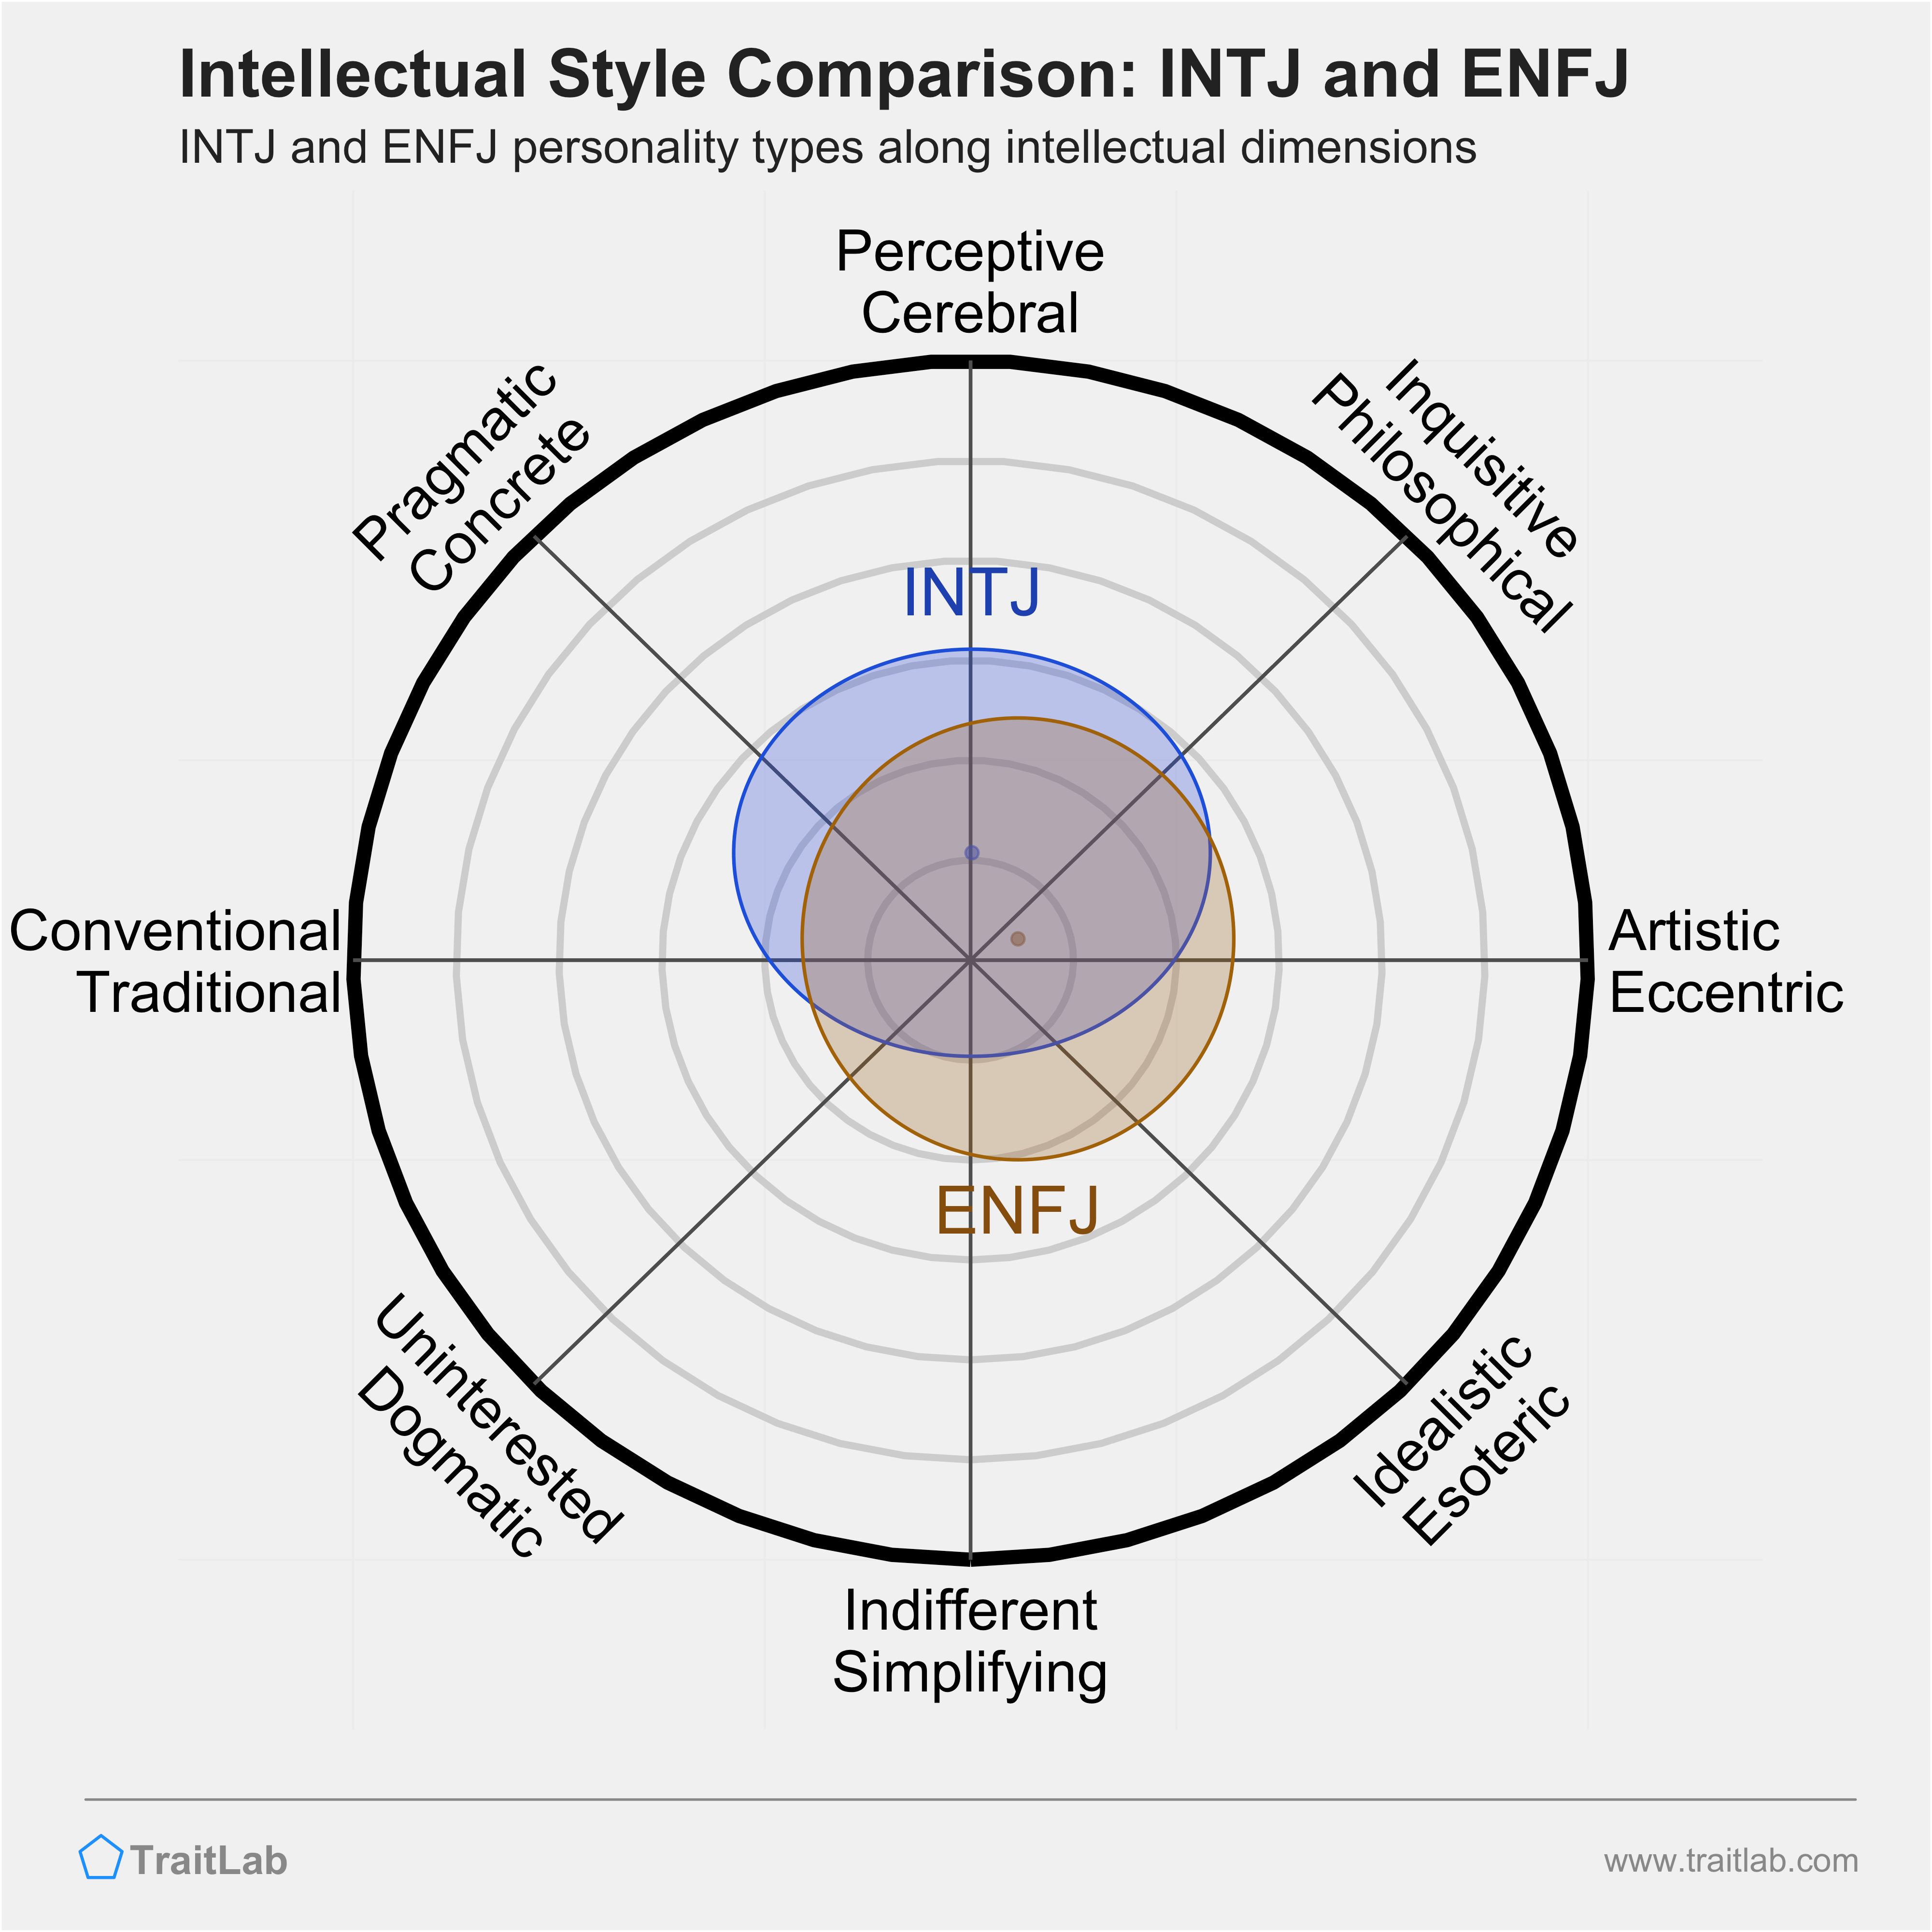 INTJ and ENFJ comparison across intellectual dimensions